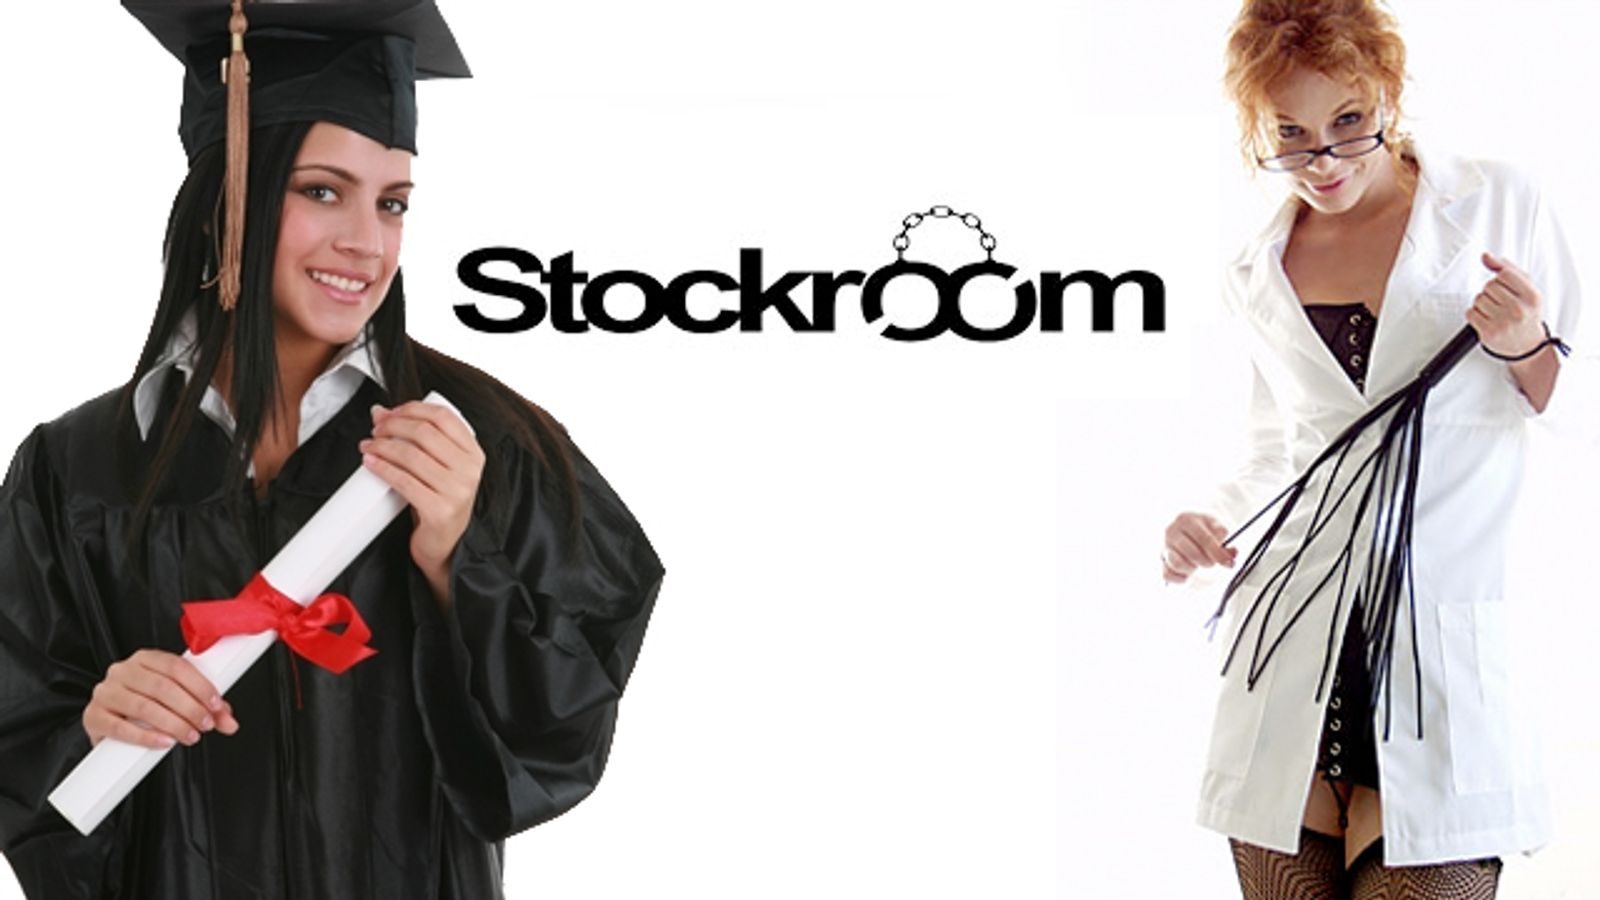 Bondage 101: Stockroom University Opens